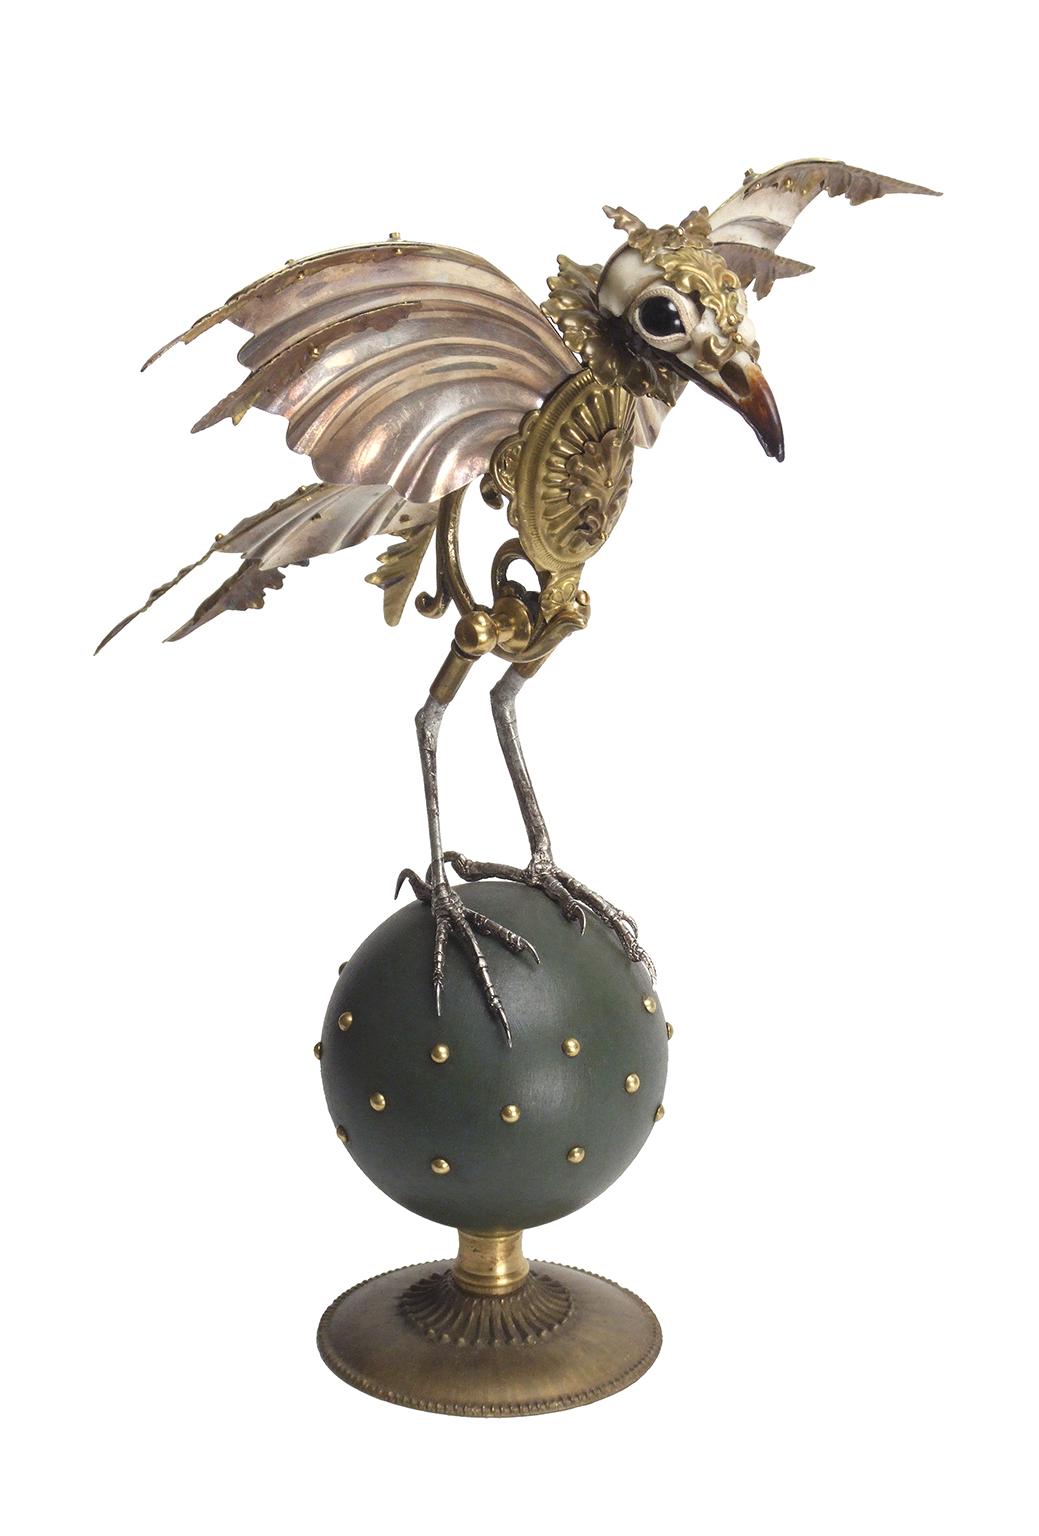 "Skylar", antique hardware and findings, bird, sculpture - Mixed Media Art by Jessica Joslin